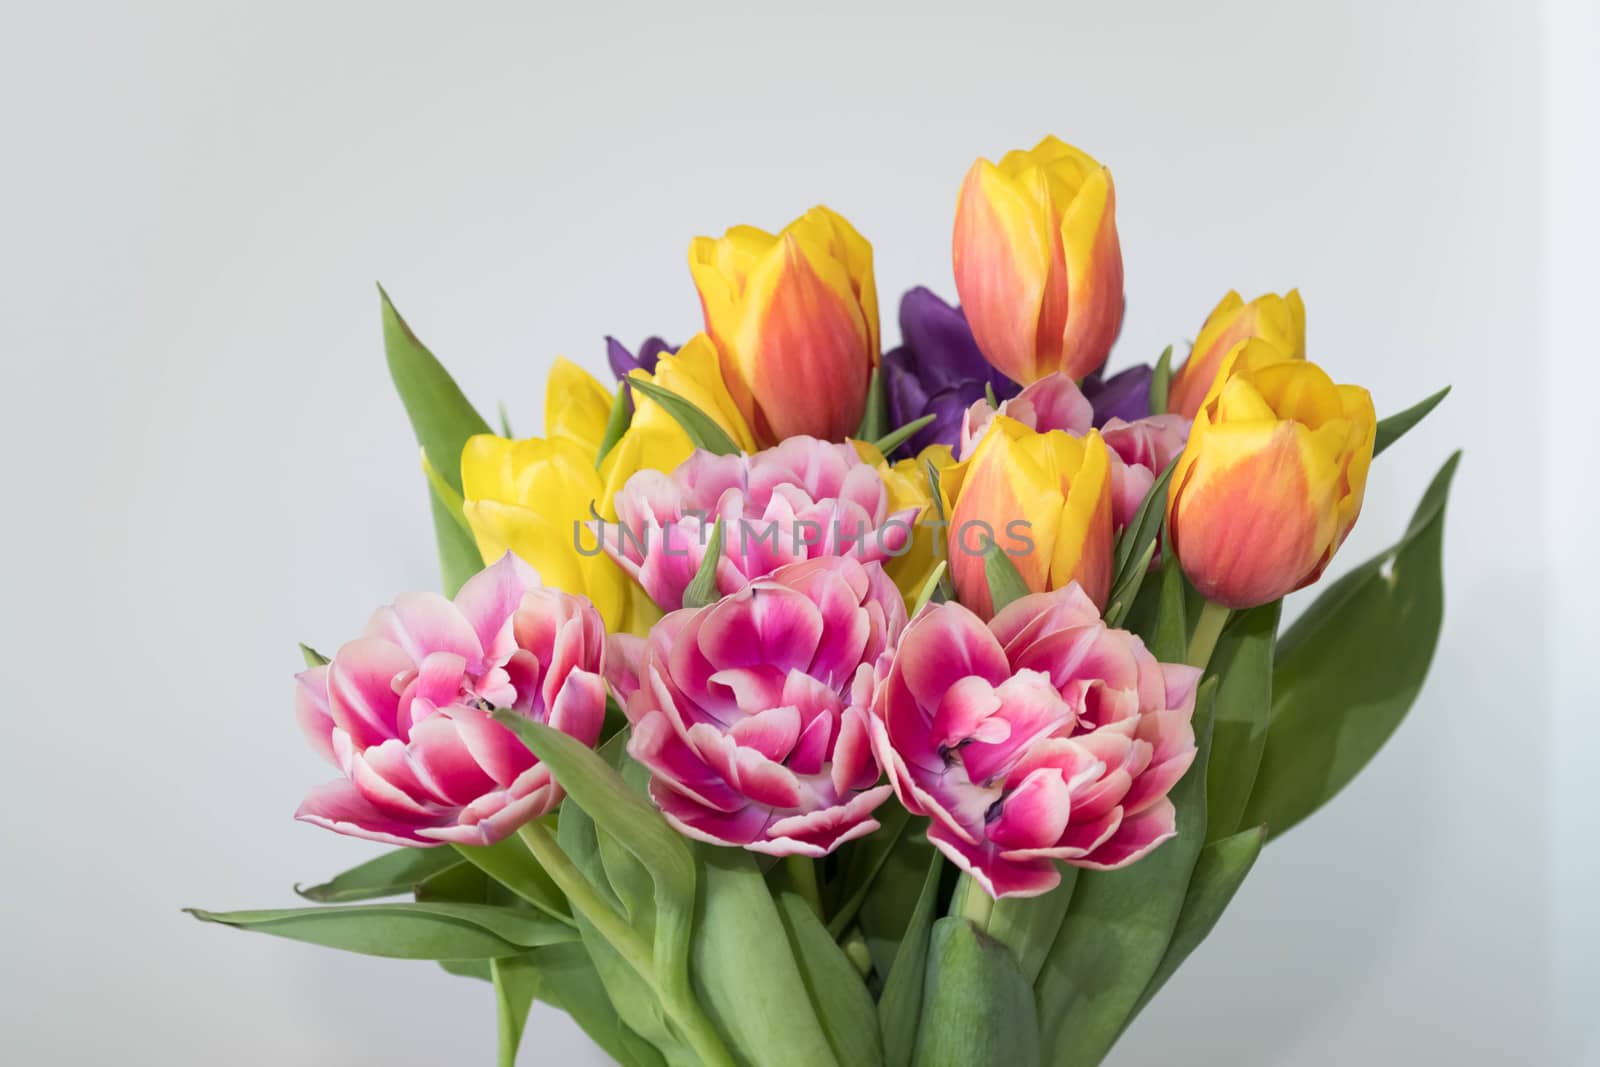 Spring tulips  by riverheron_photos